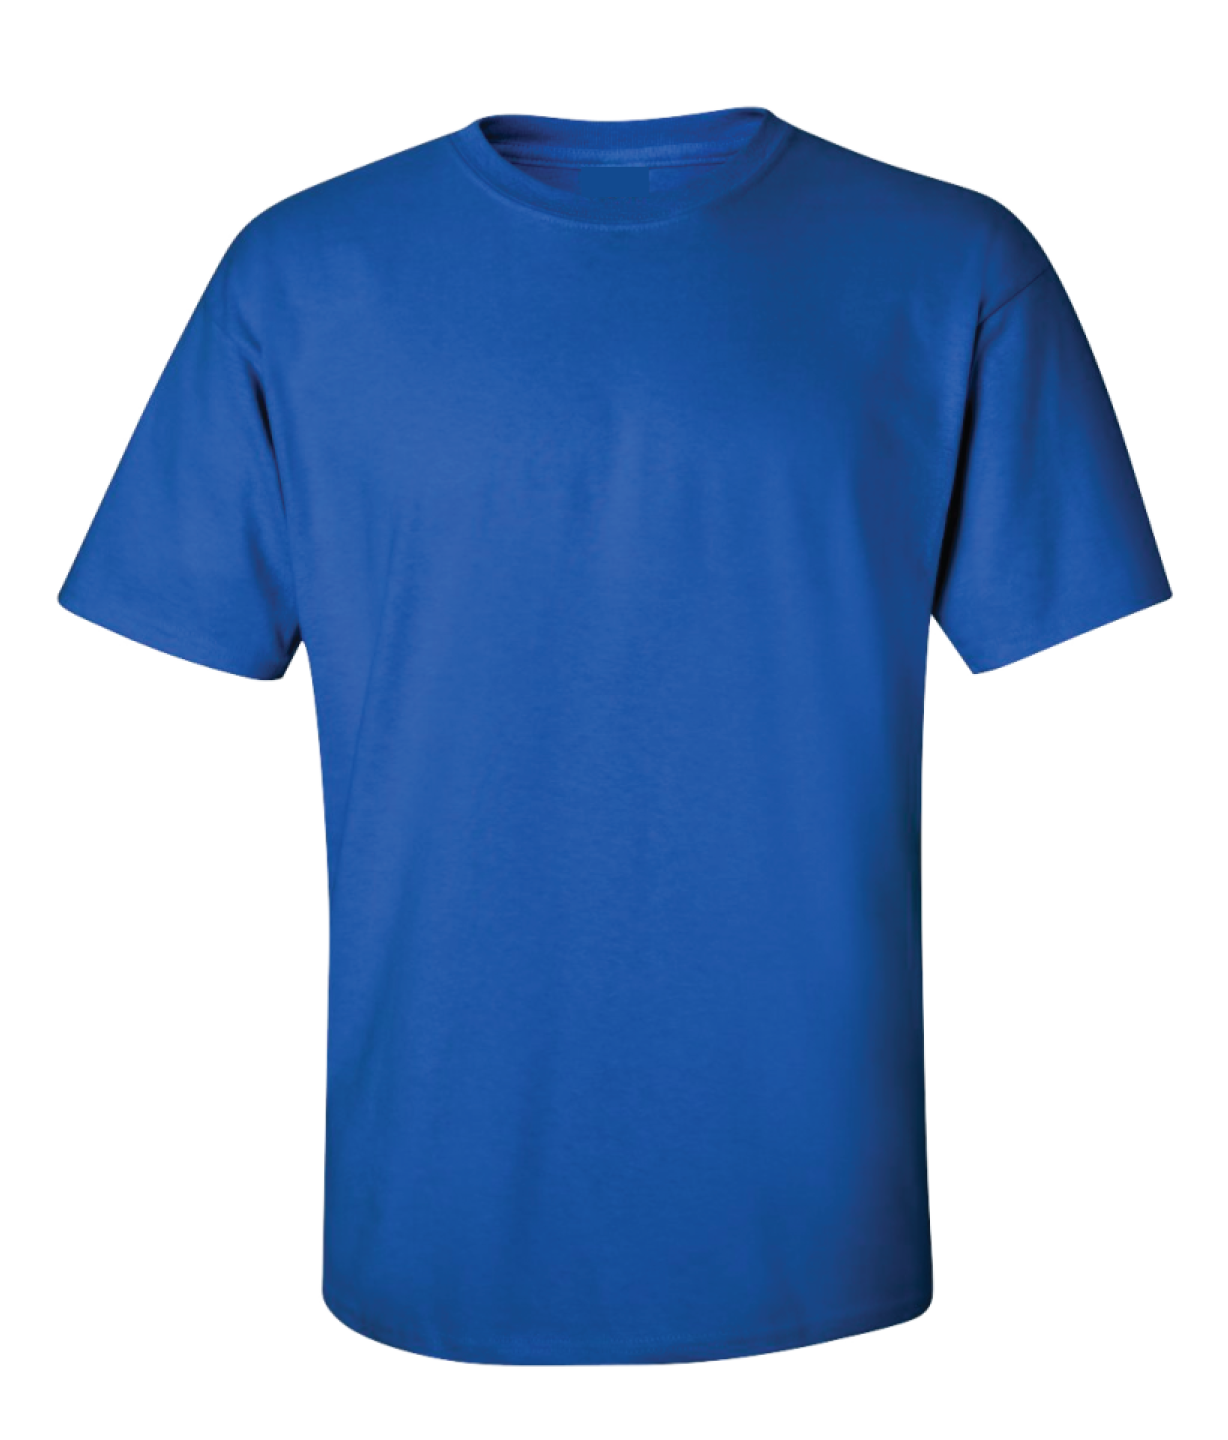 BEOK Clothing - Blue t -shirt